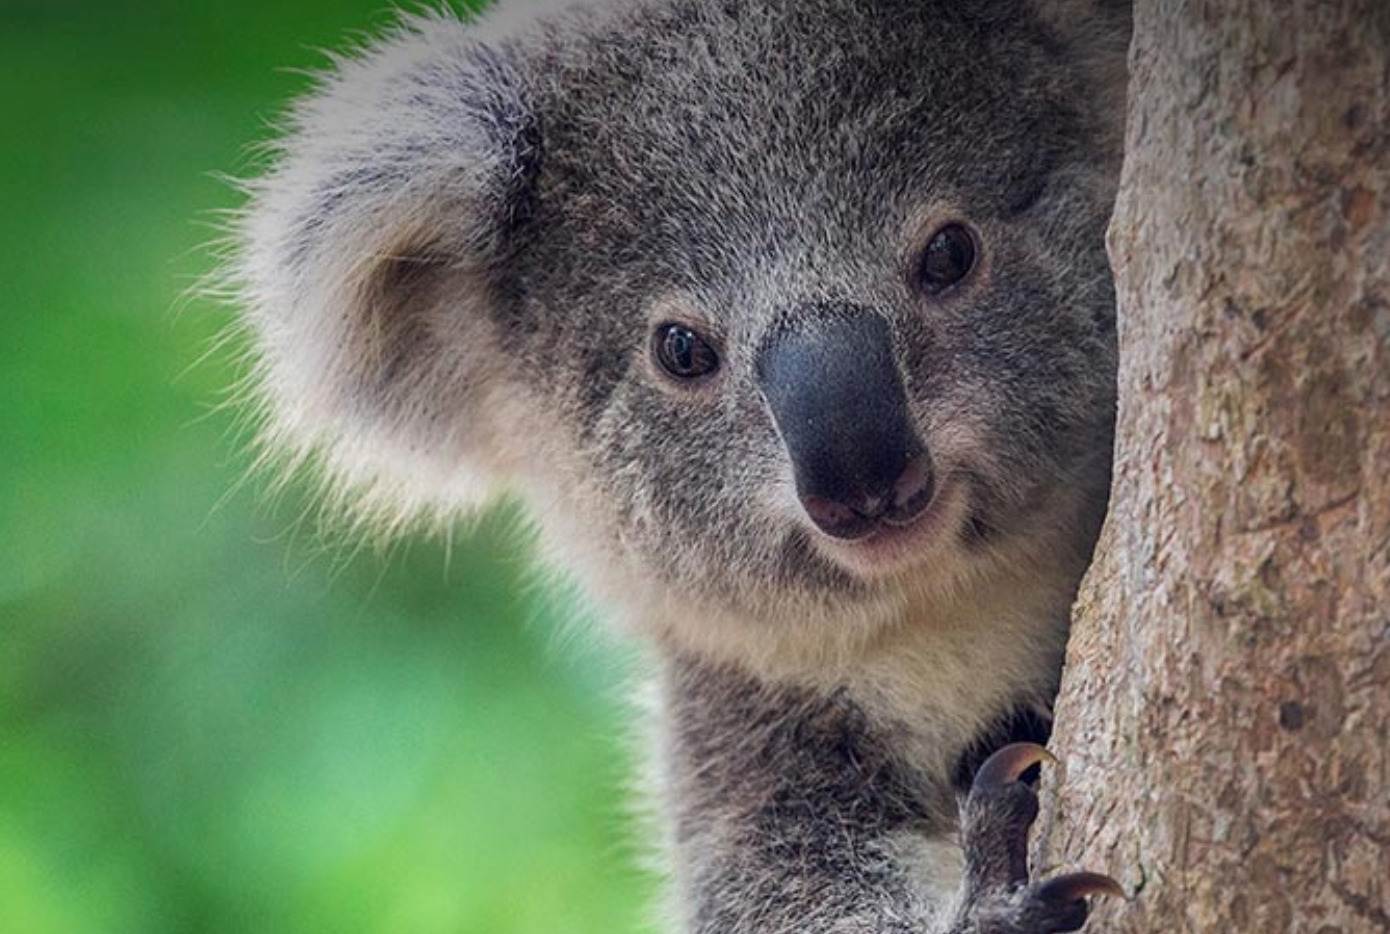 Port Stephens koala sanctuary named among state's best tourist spots -  Inside Local Government